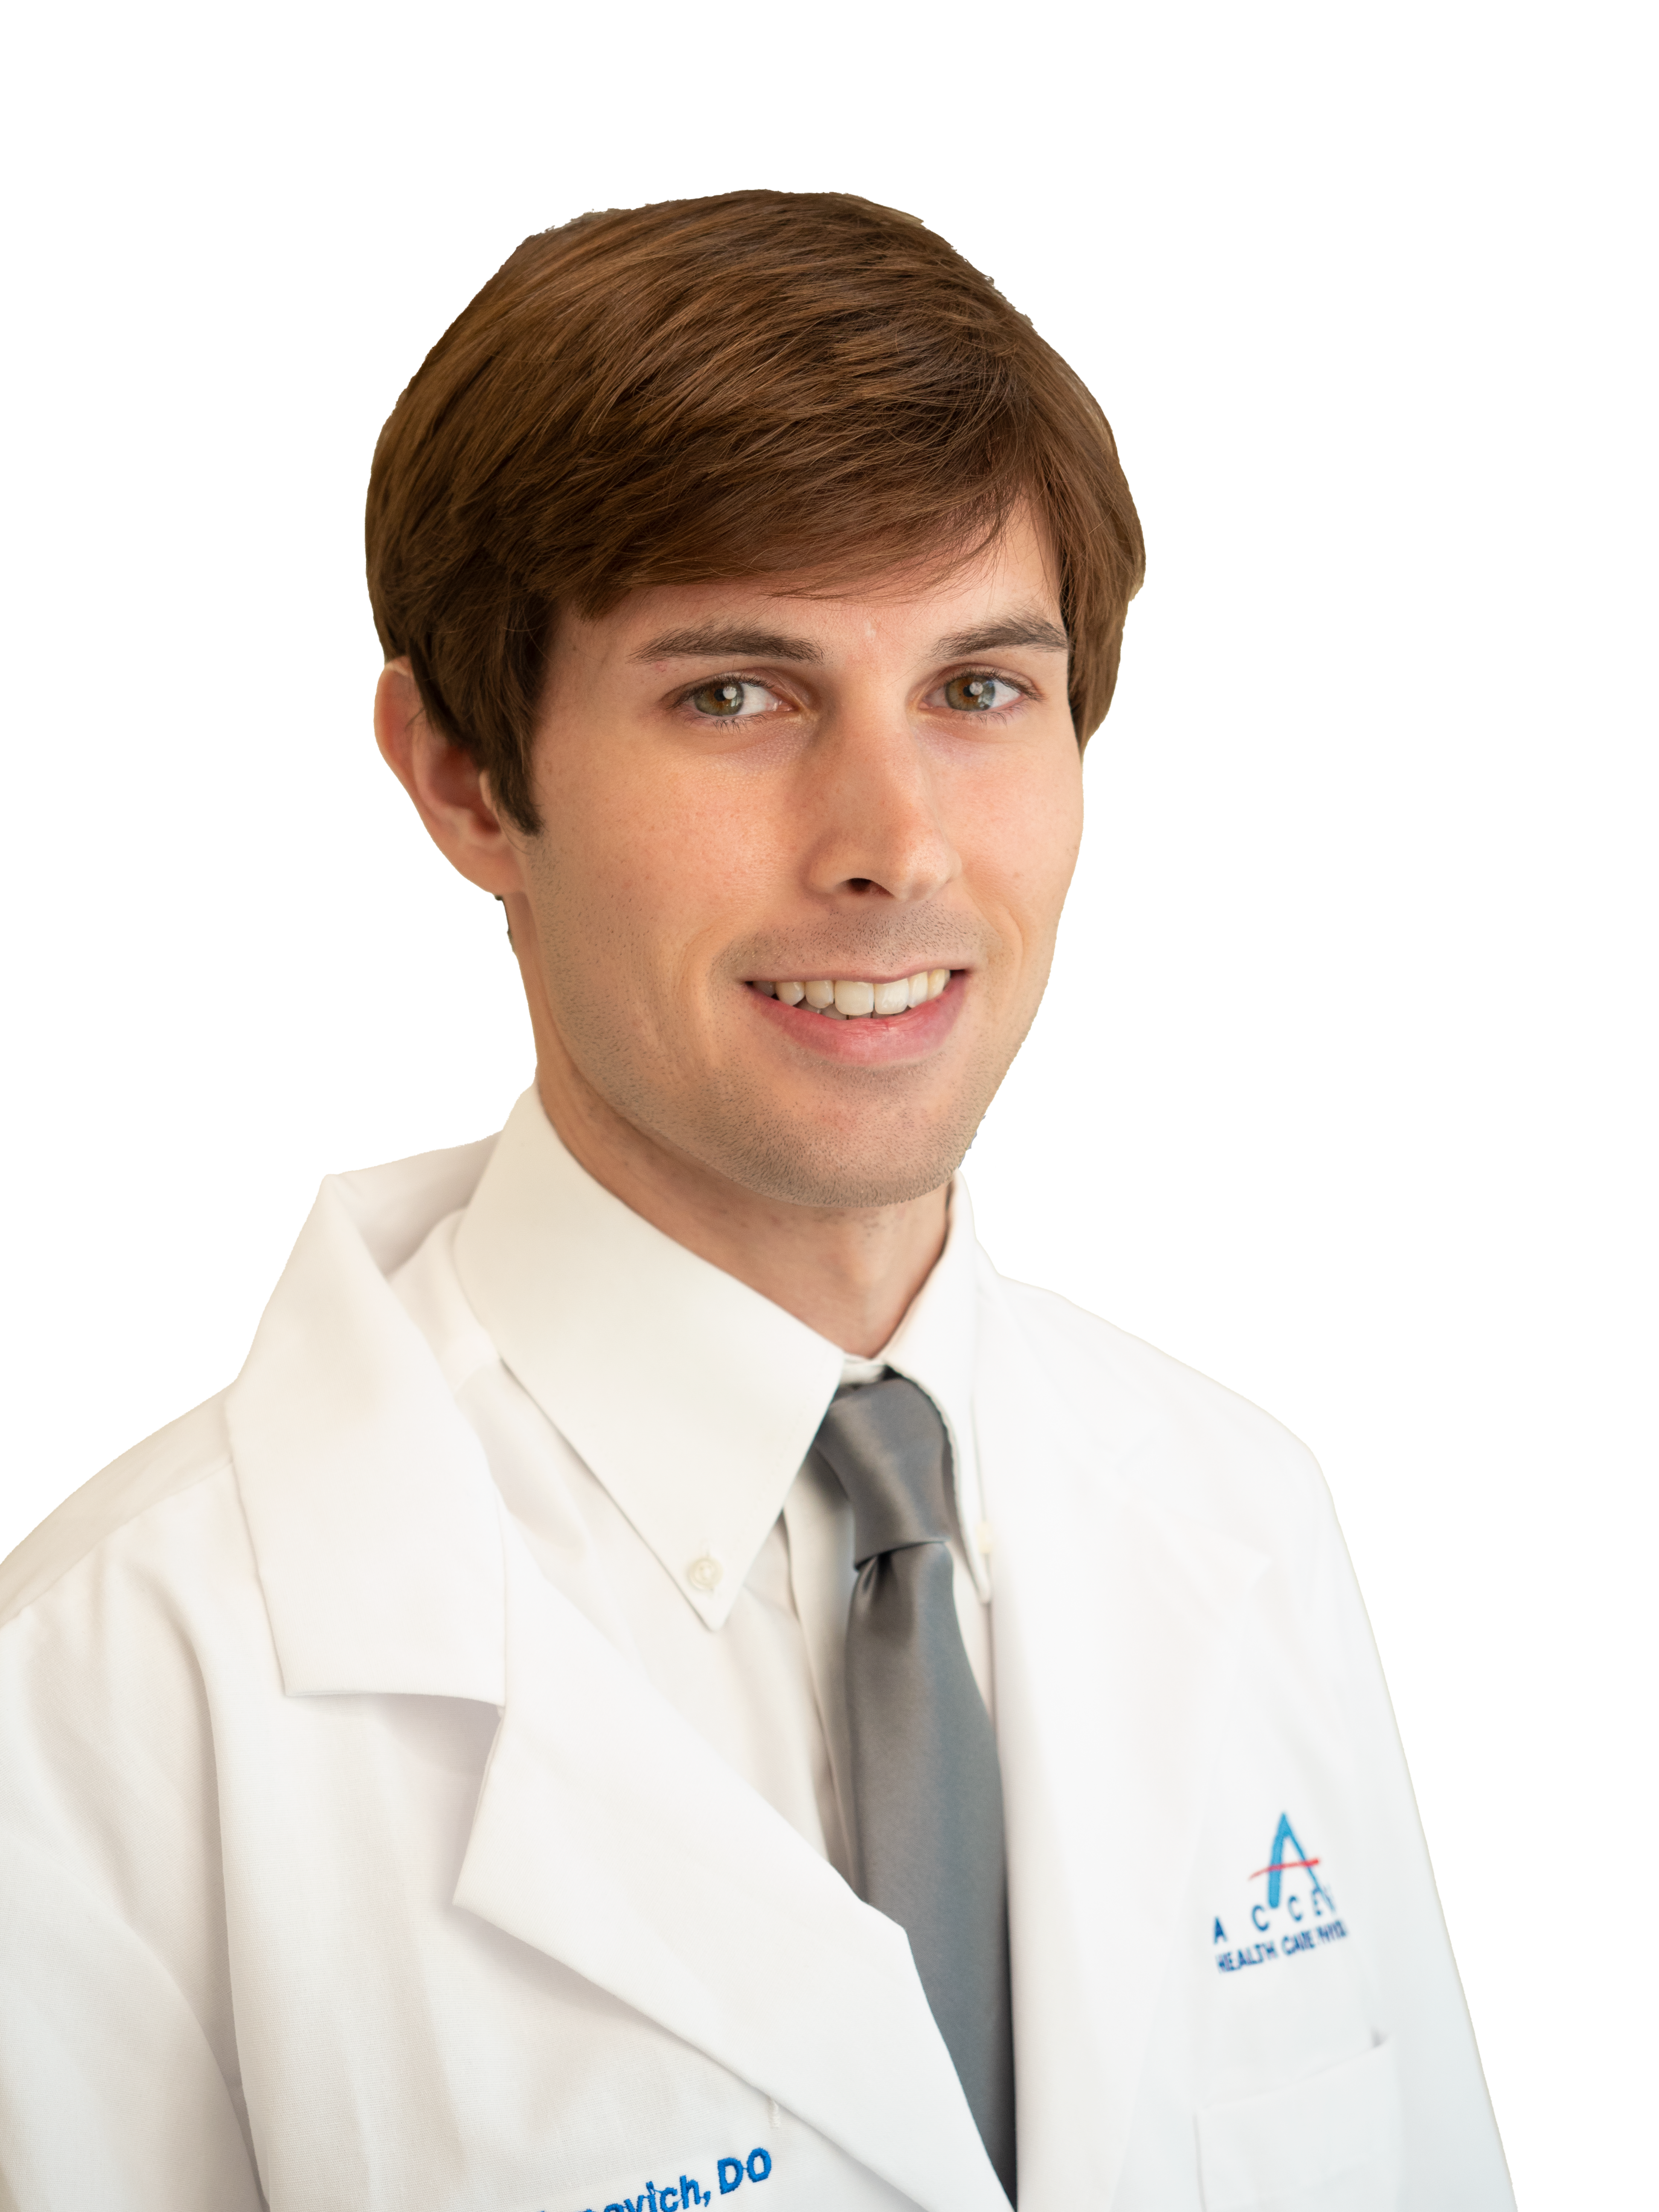 Kyle Borodunovich, DO - Internal Medicine Specialist at Access